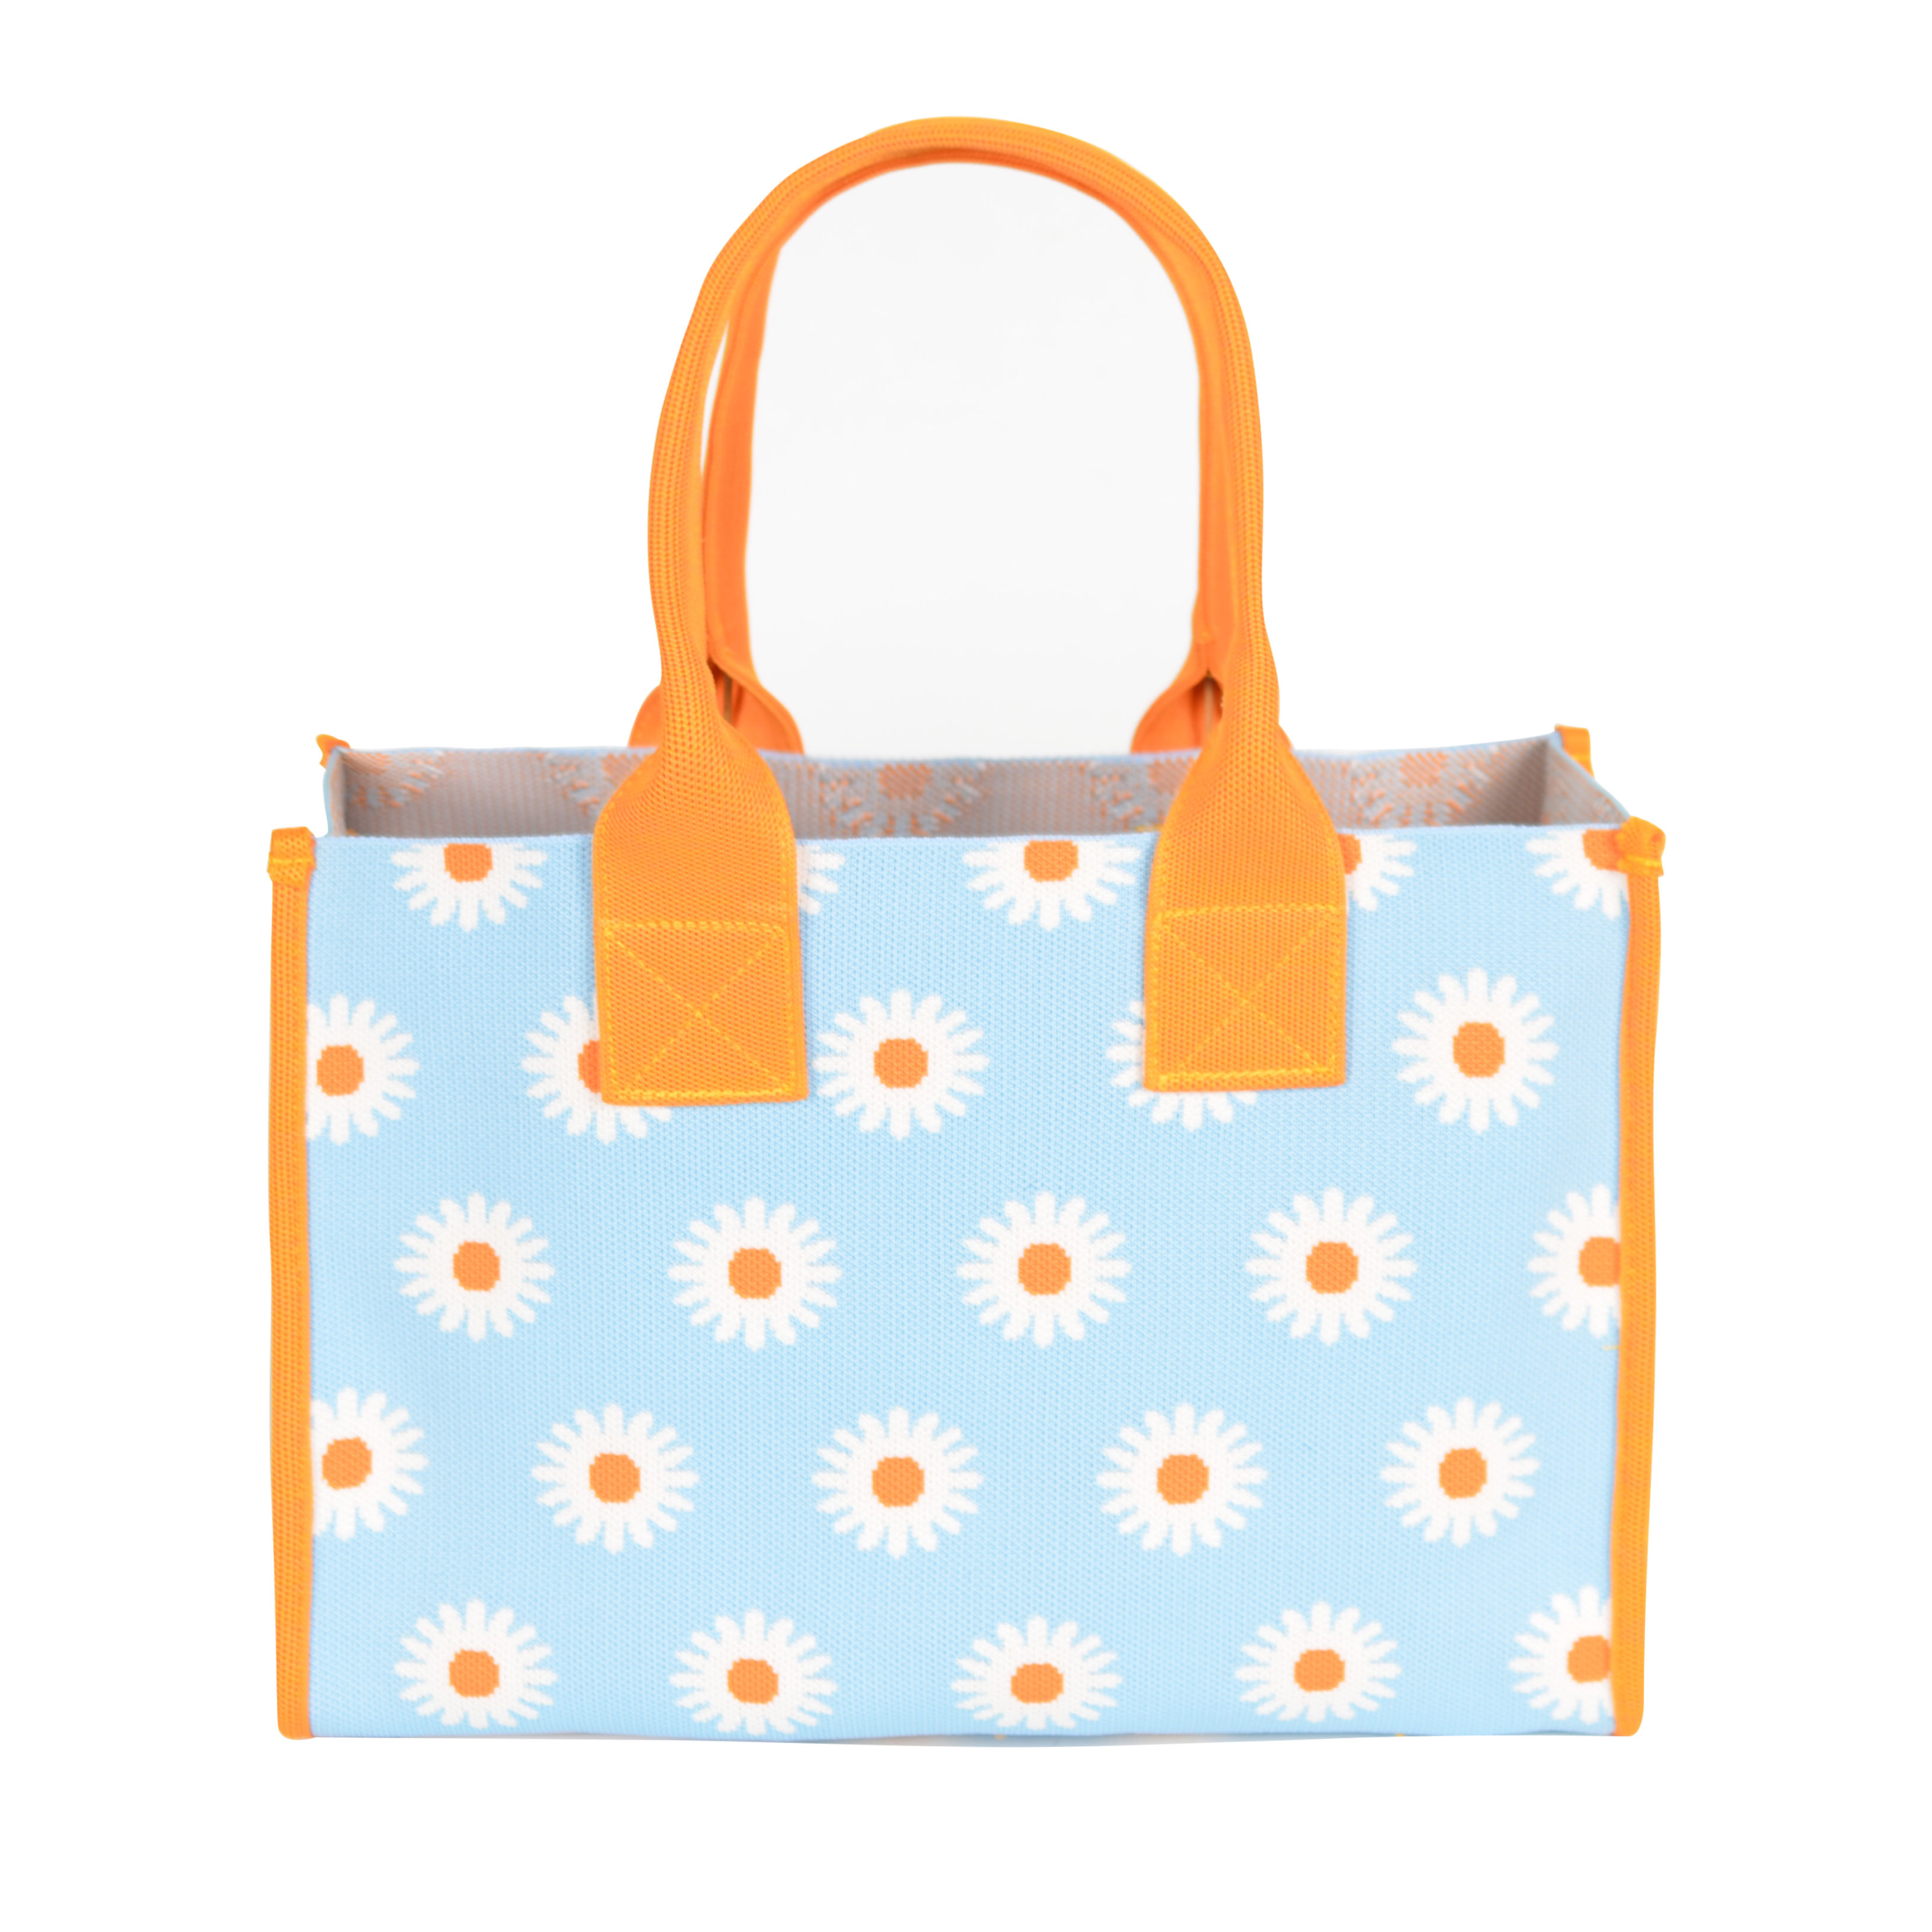 Wholesale Plain Custom Printed beach tote bags with custom printed logo beach bags custom tote